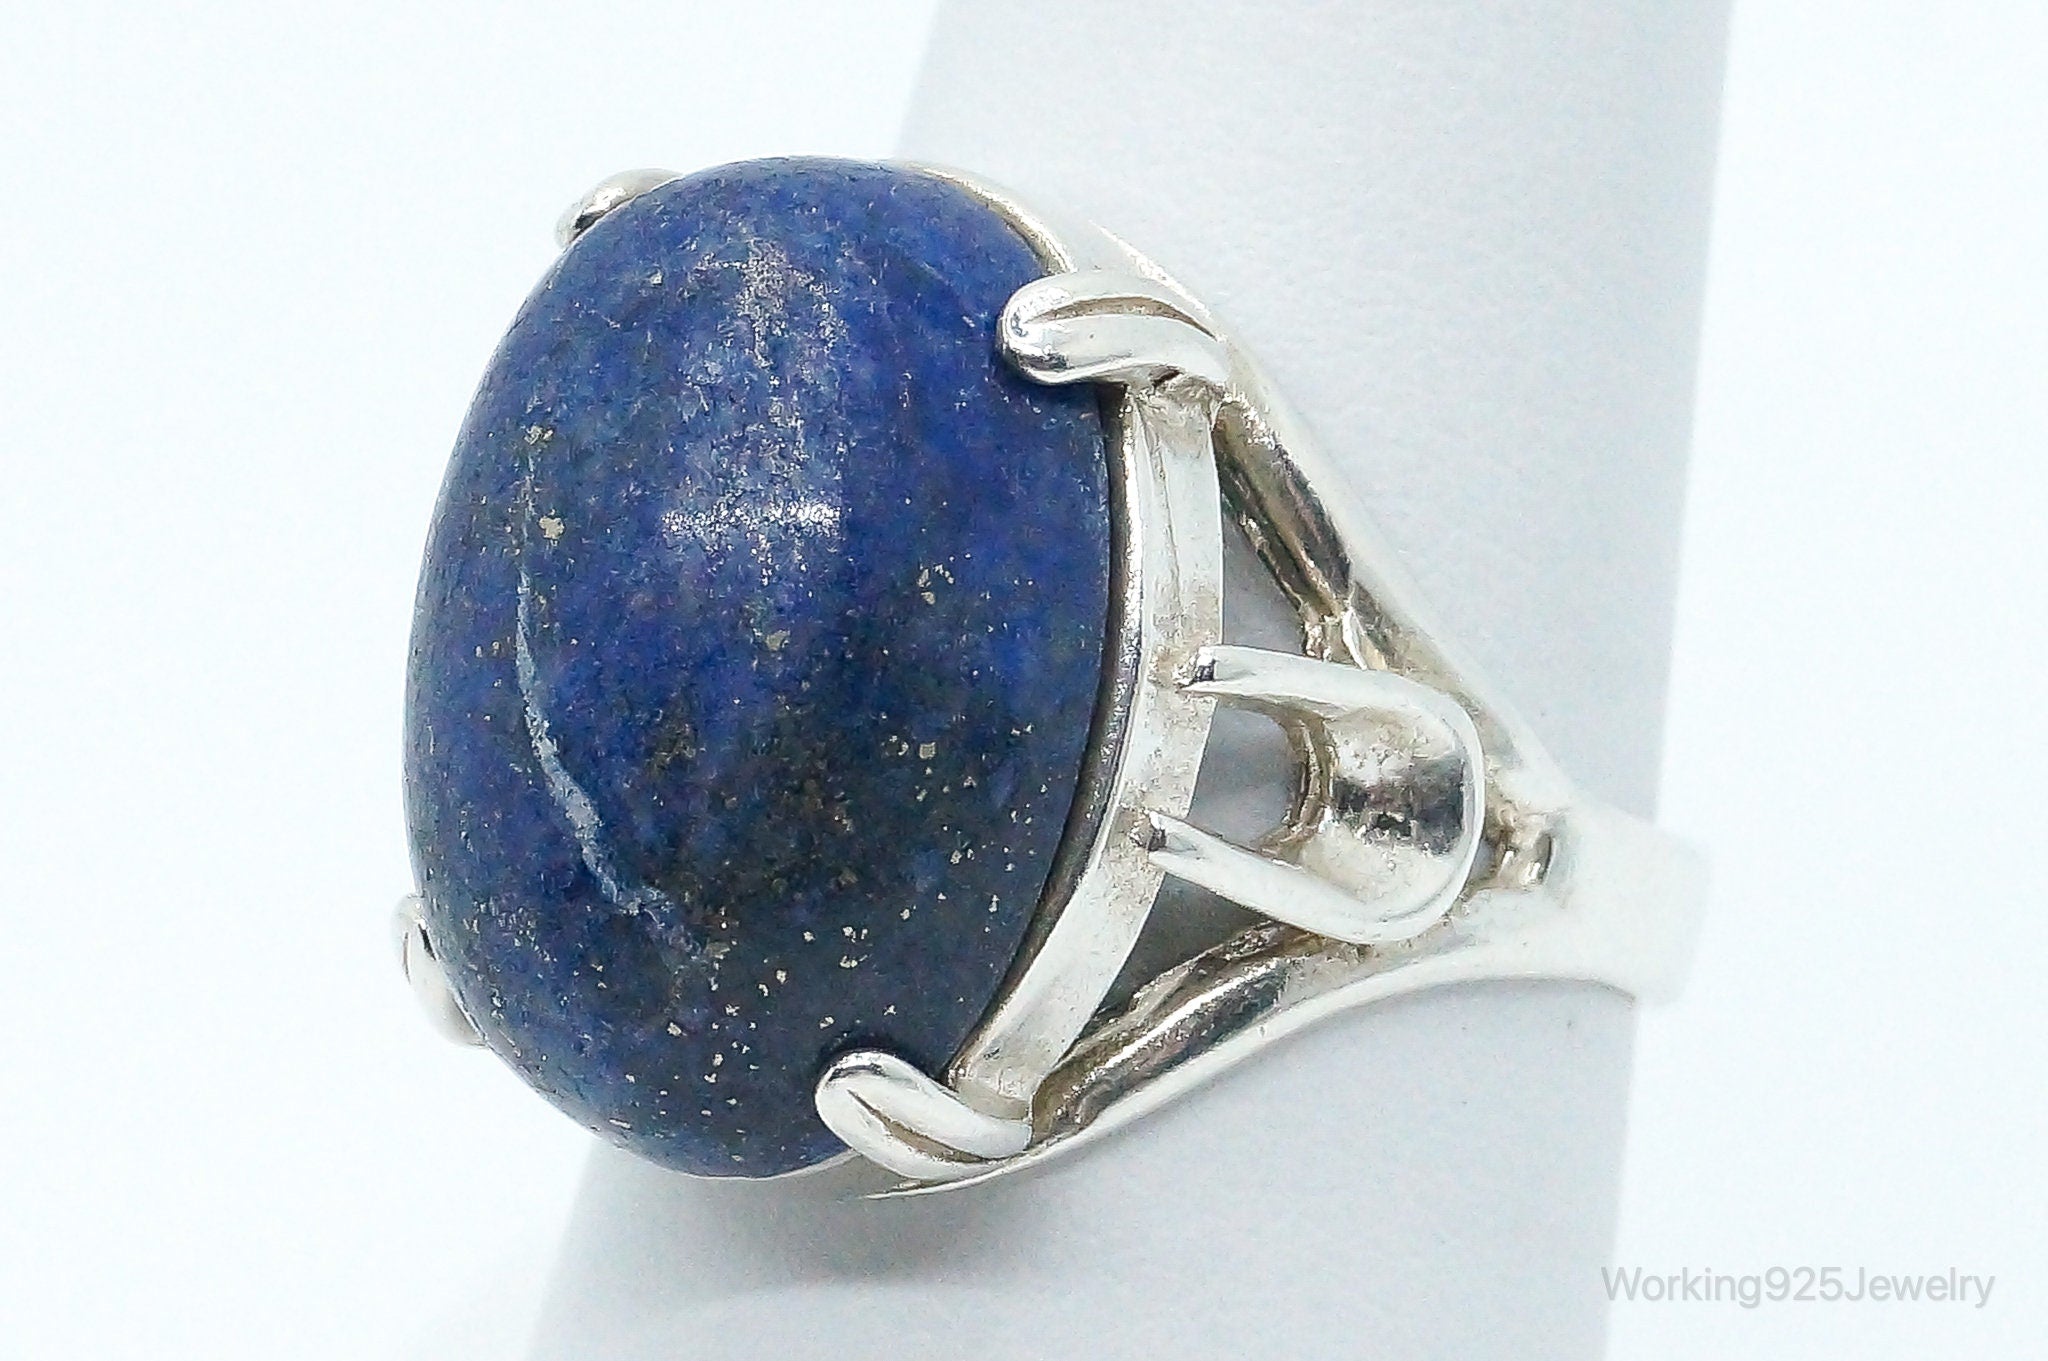 Vintage Lapis Lazuli Sterling Silver Ring - Size 7.25